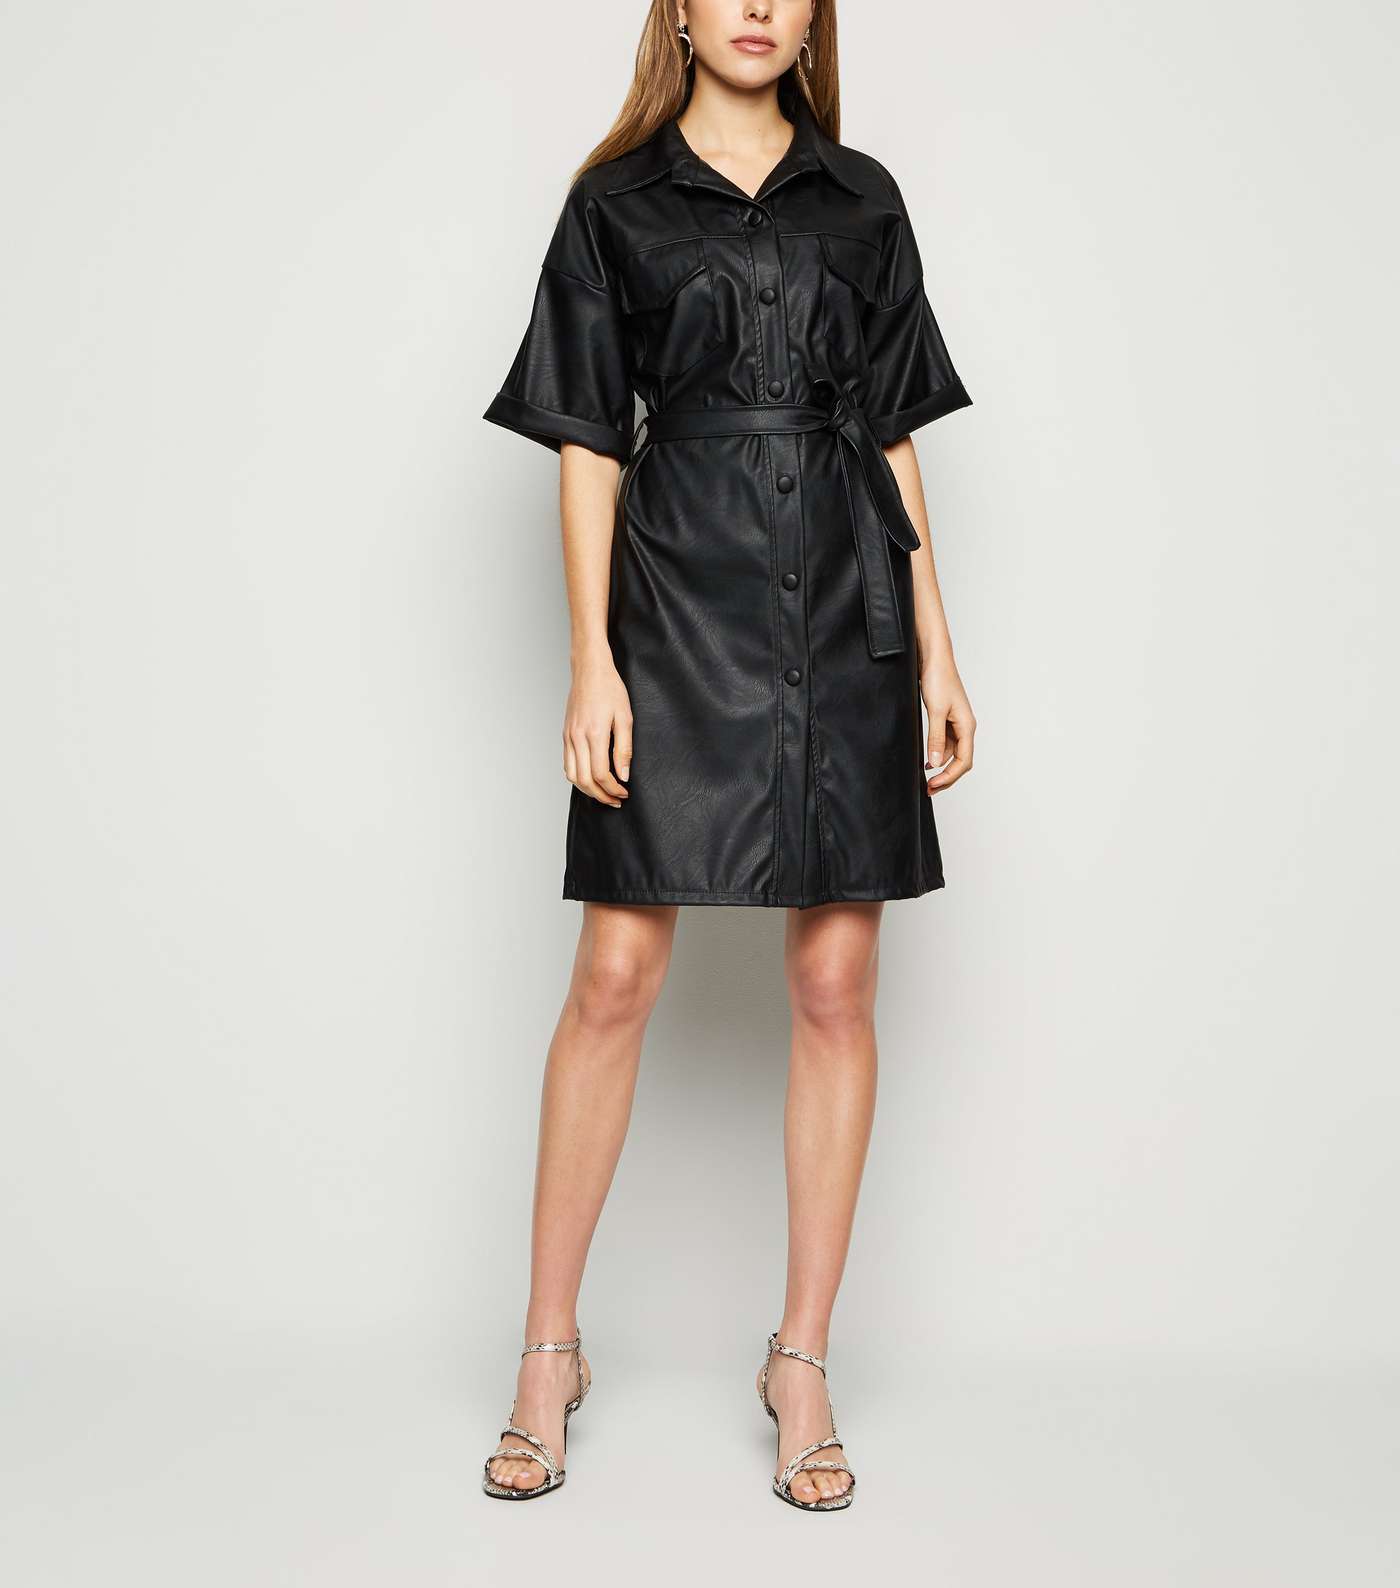 Cameo Rose Black Leather-Look Shirt Dress Image 2